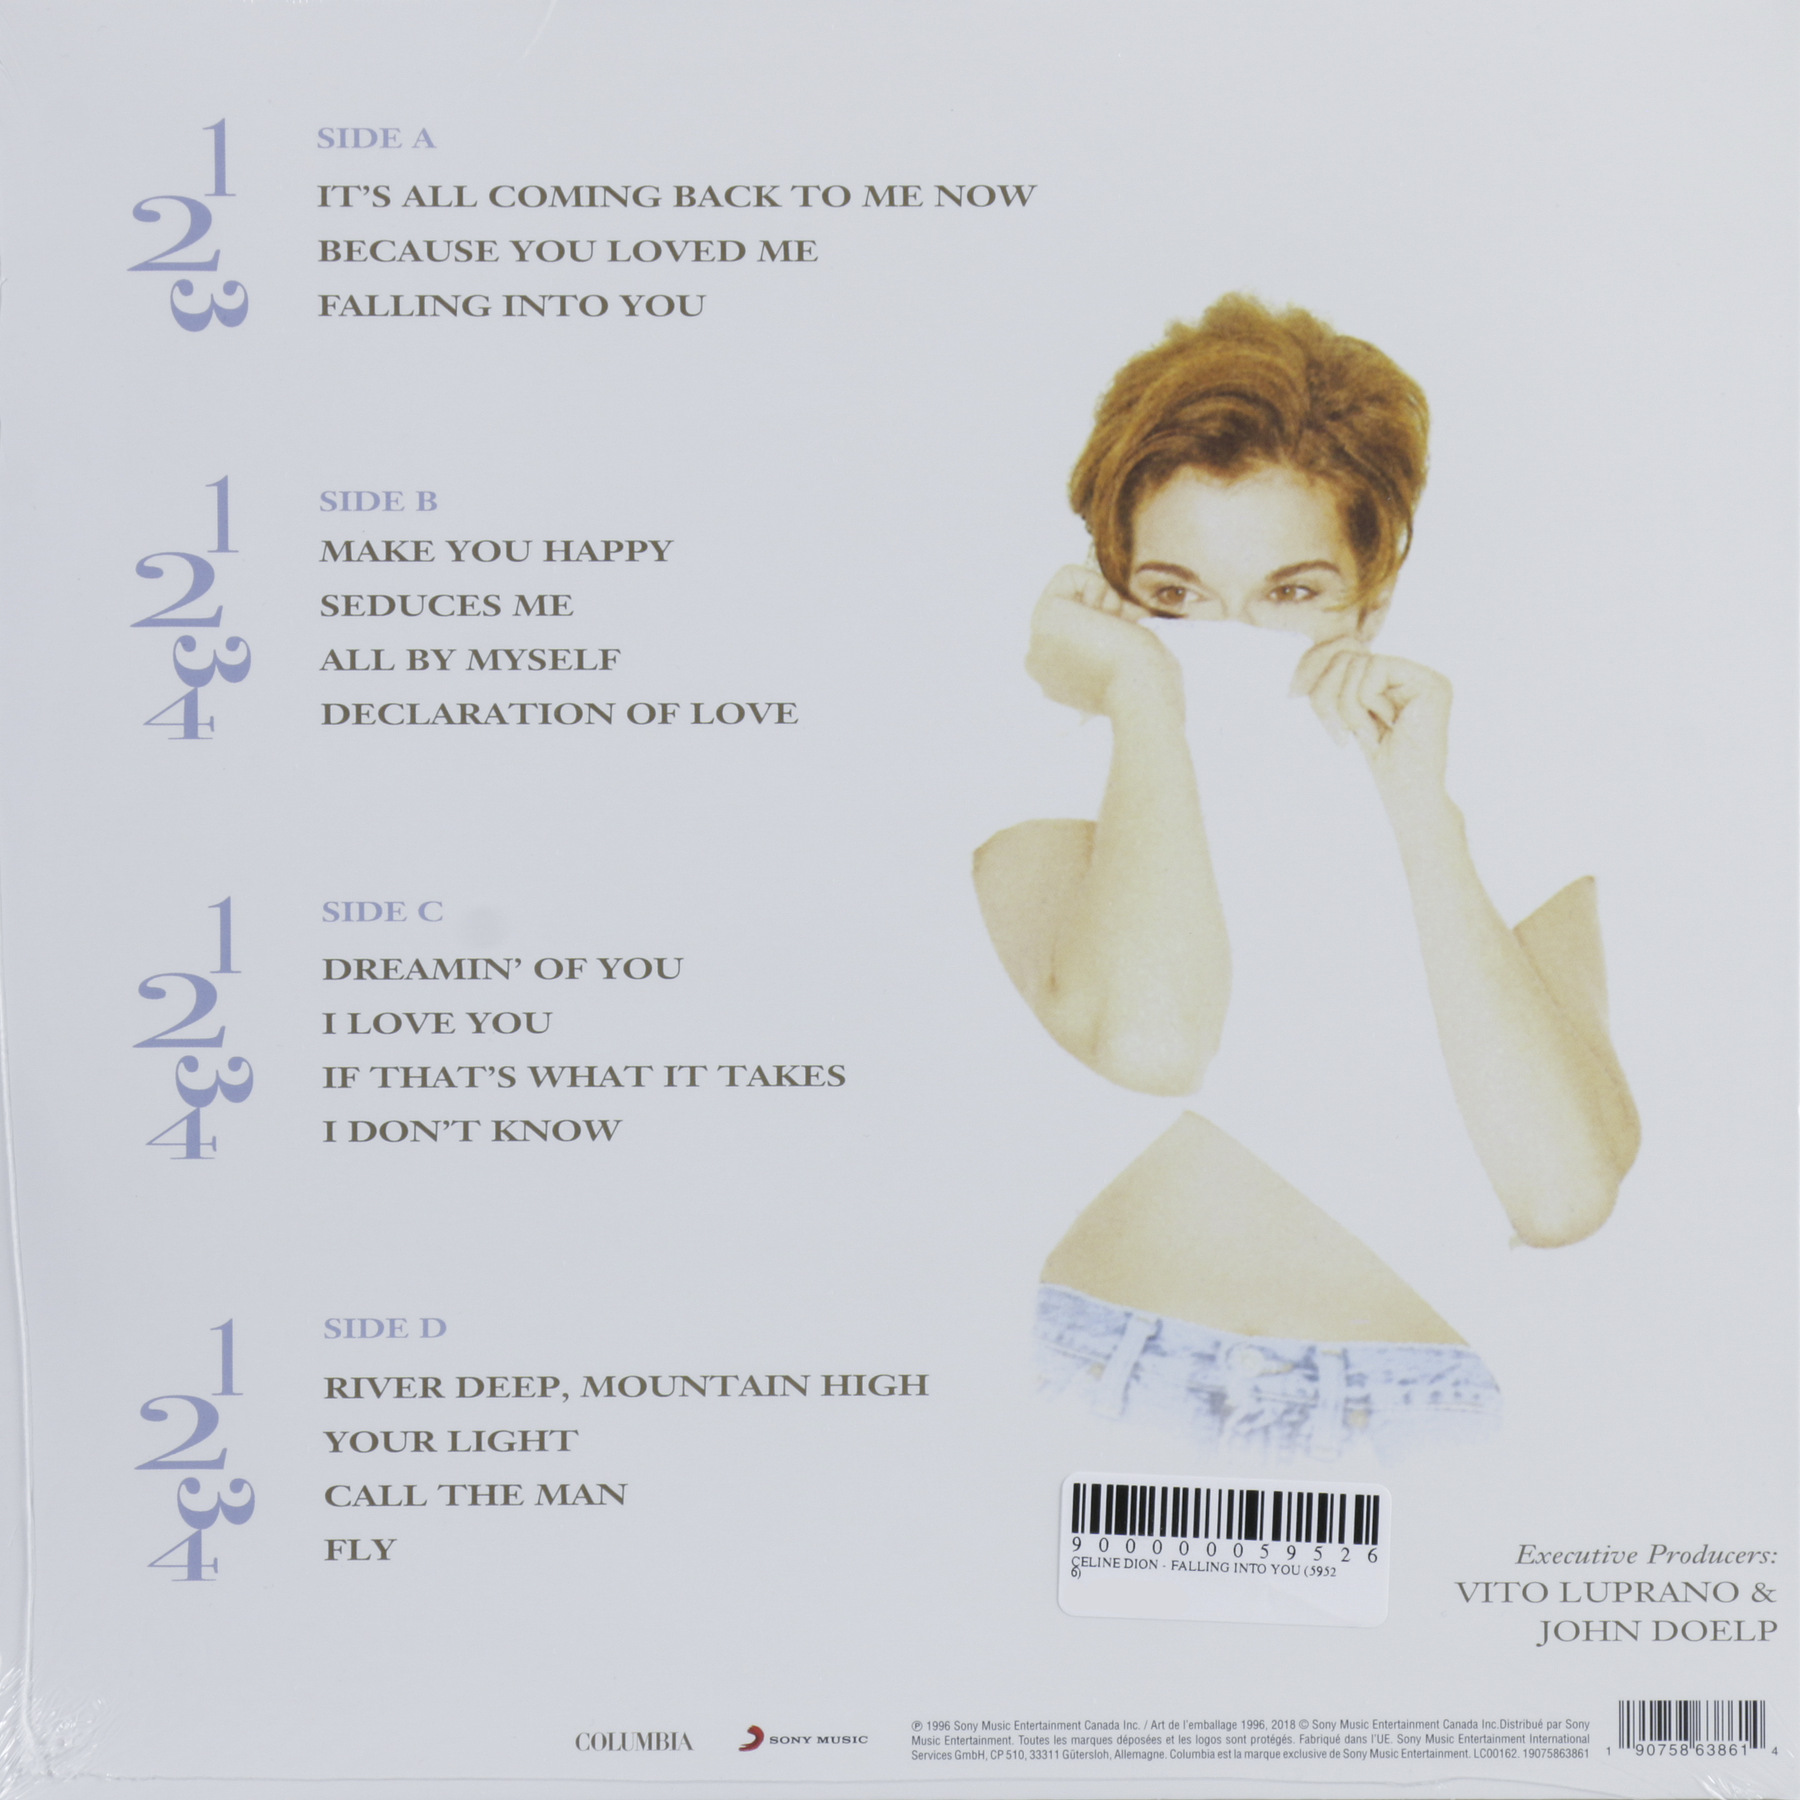 Falling into you Селин Дион. Céline Dion - Falling into you (1996). Селин Дион 1996. Селин Дион альбом Falling into you. By myself dion